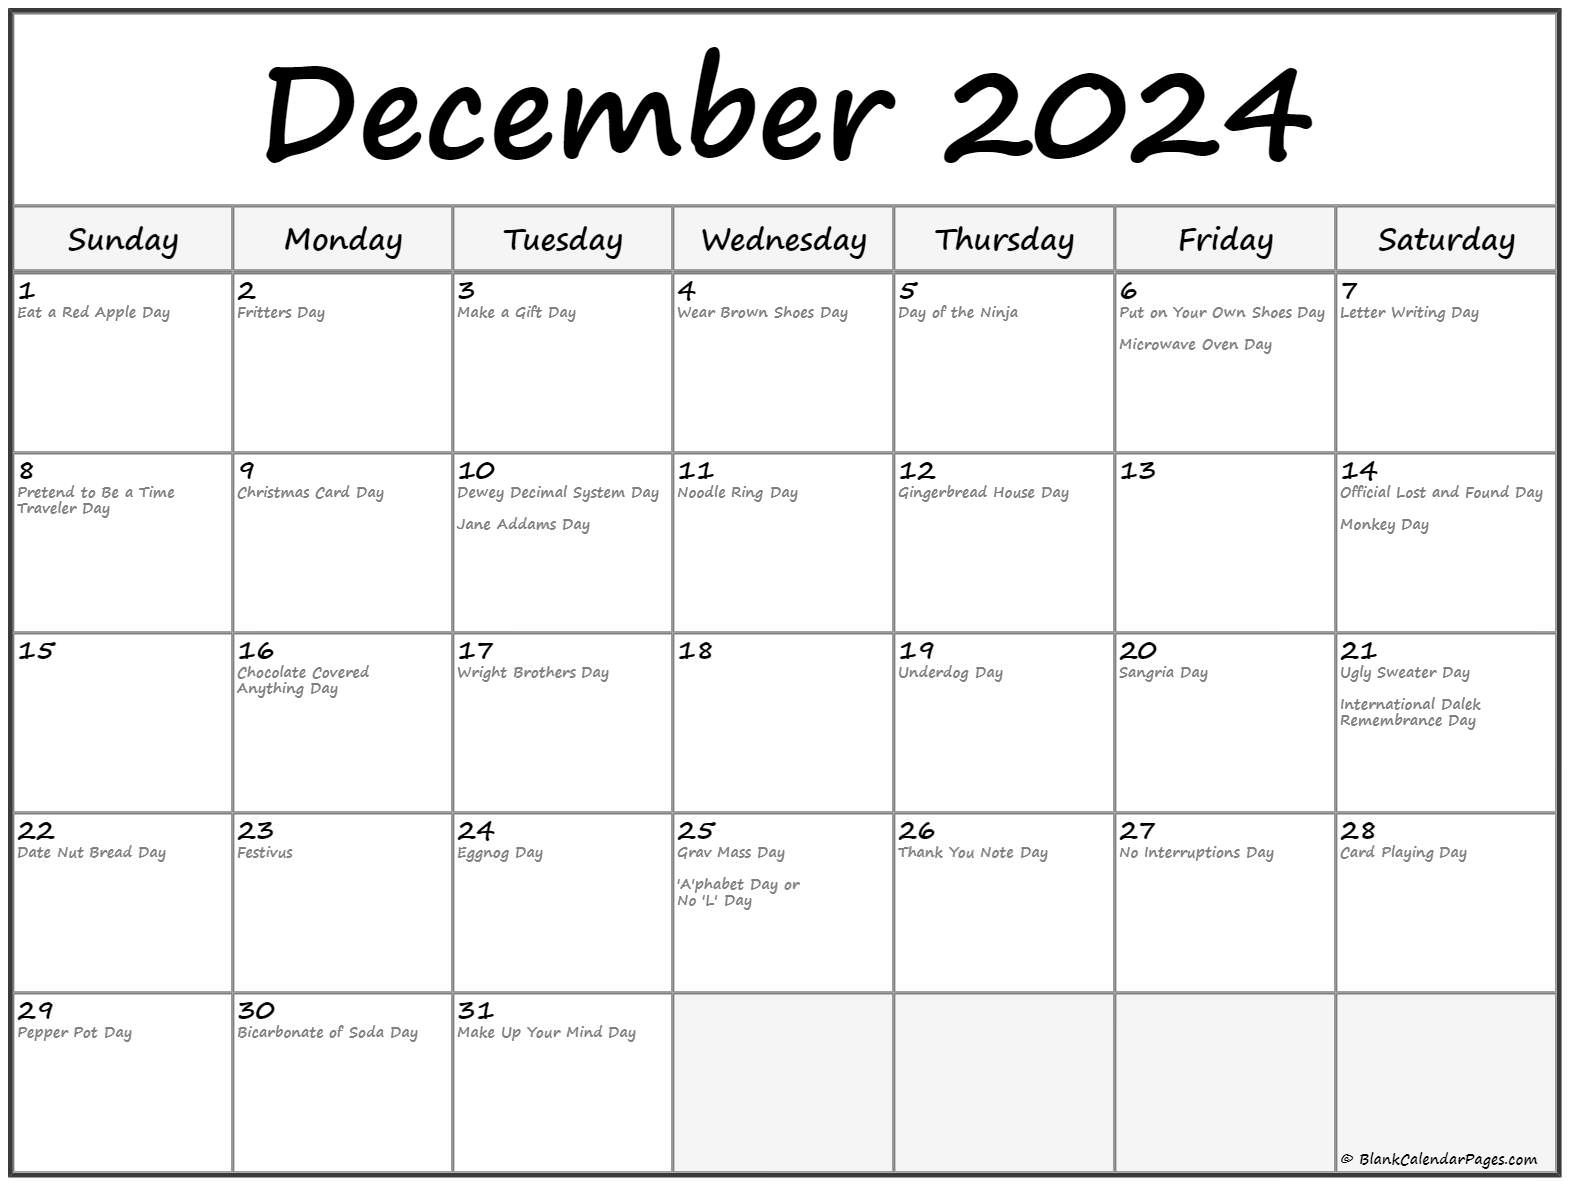 December 2020 calendar with holidays